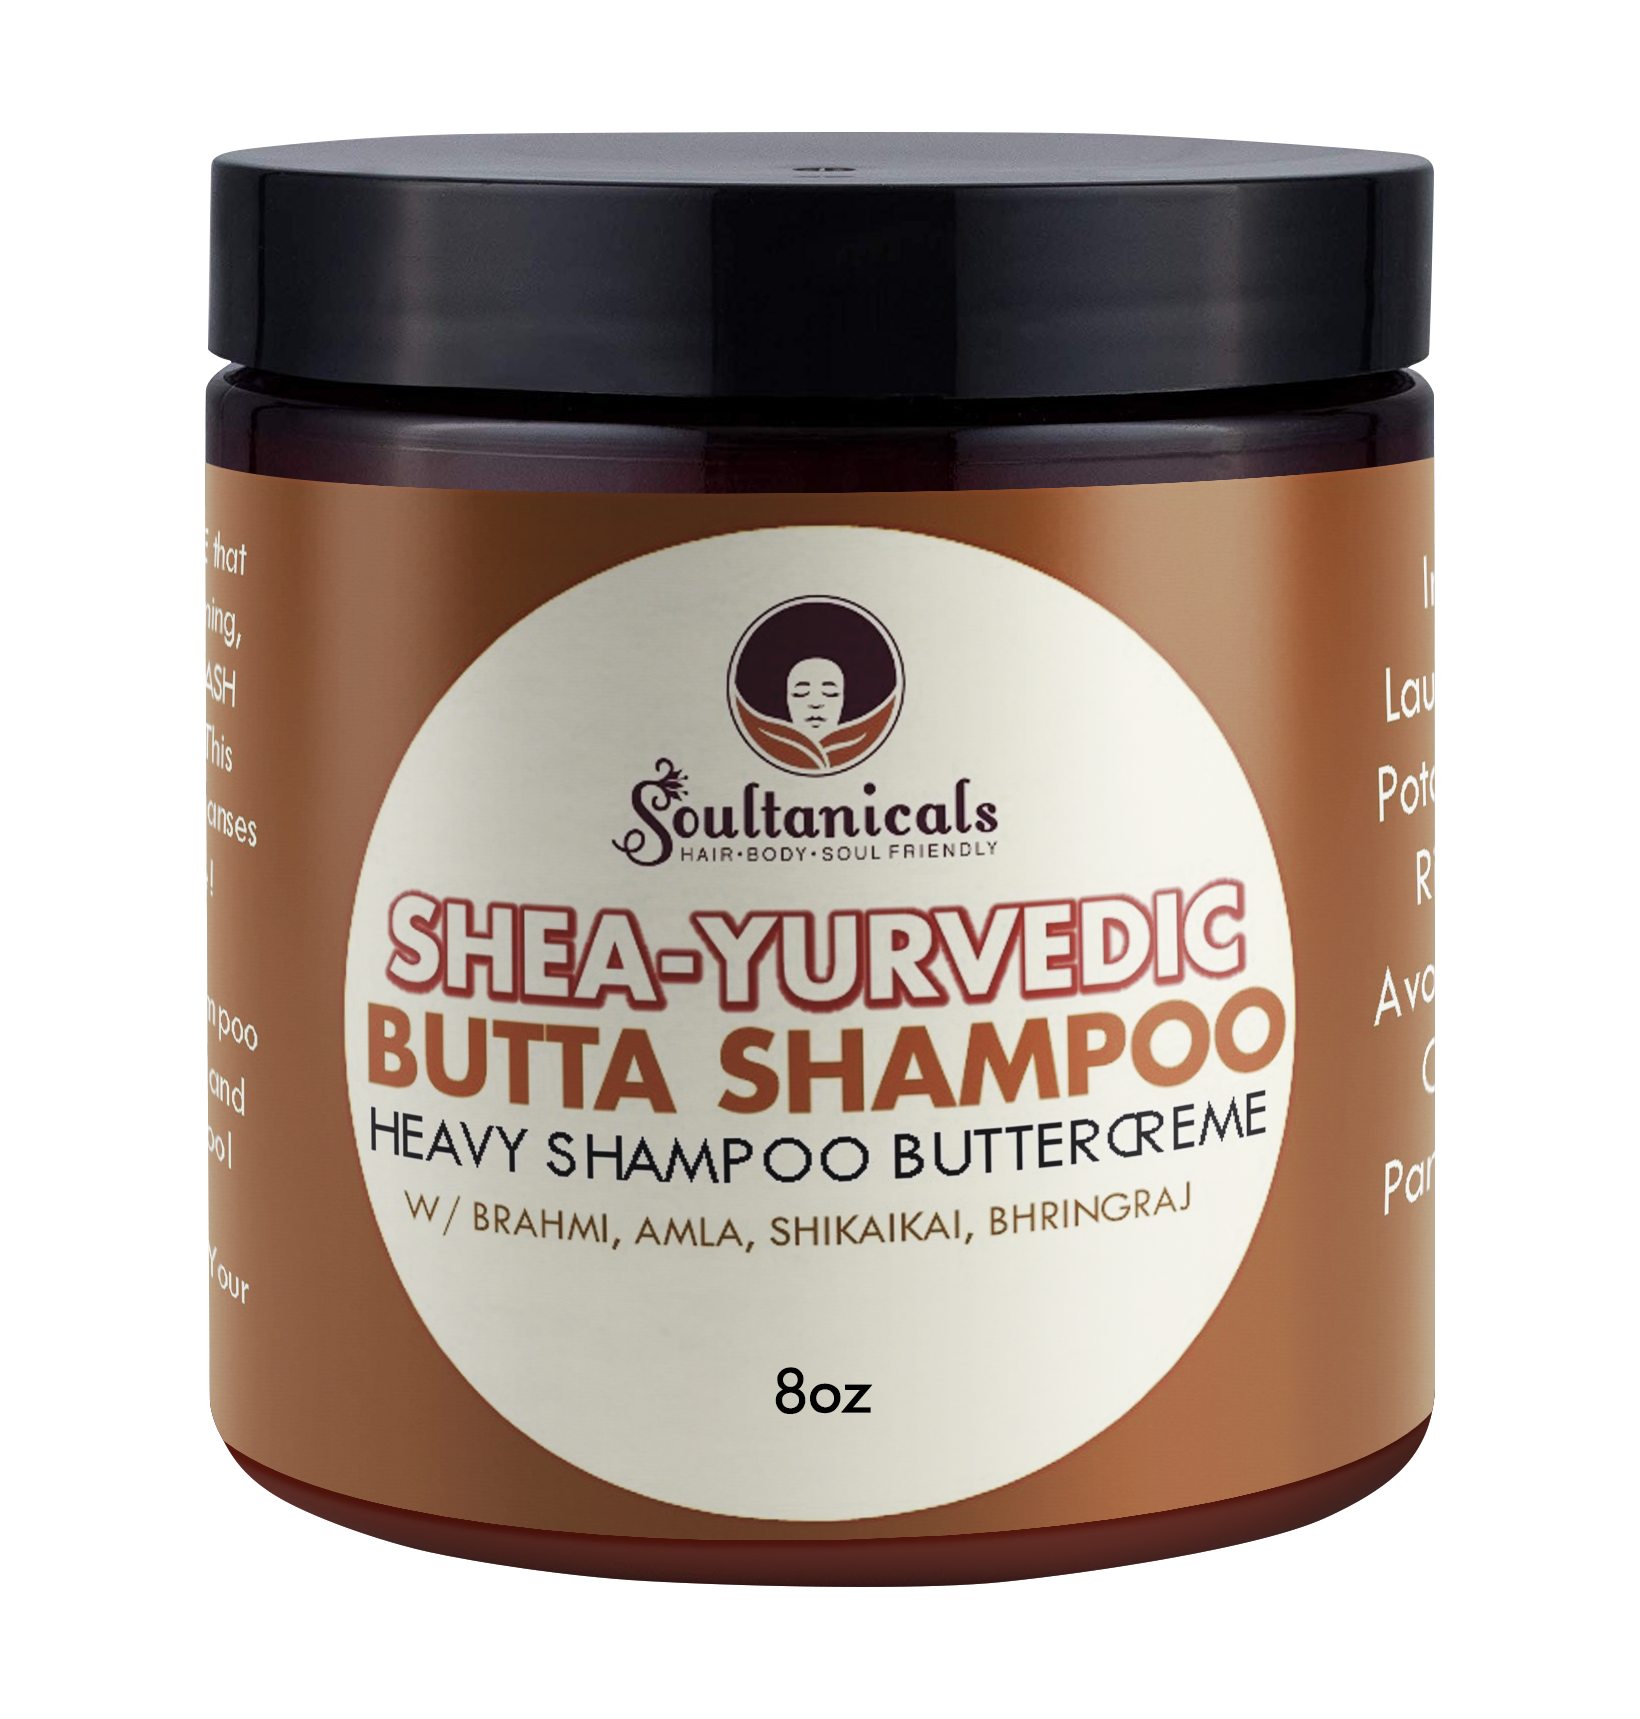 Shea-Yurvedic Butta Shampoo-8 oz